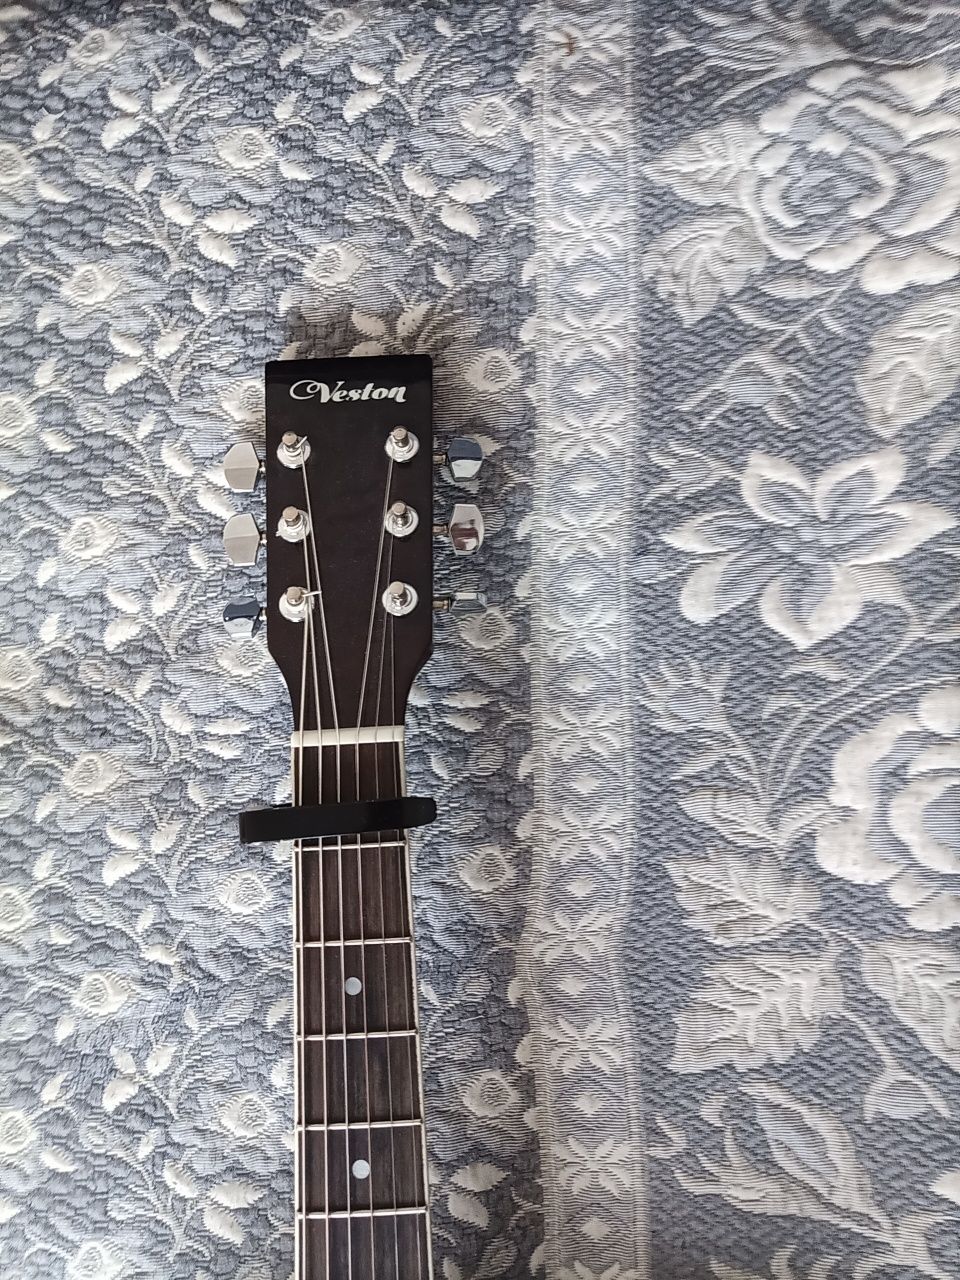 Продам гитару veston размер 40 чехол зажим подарок